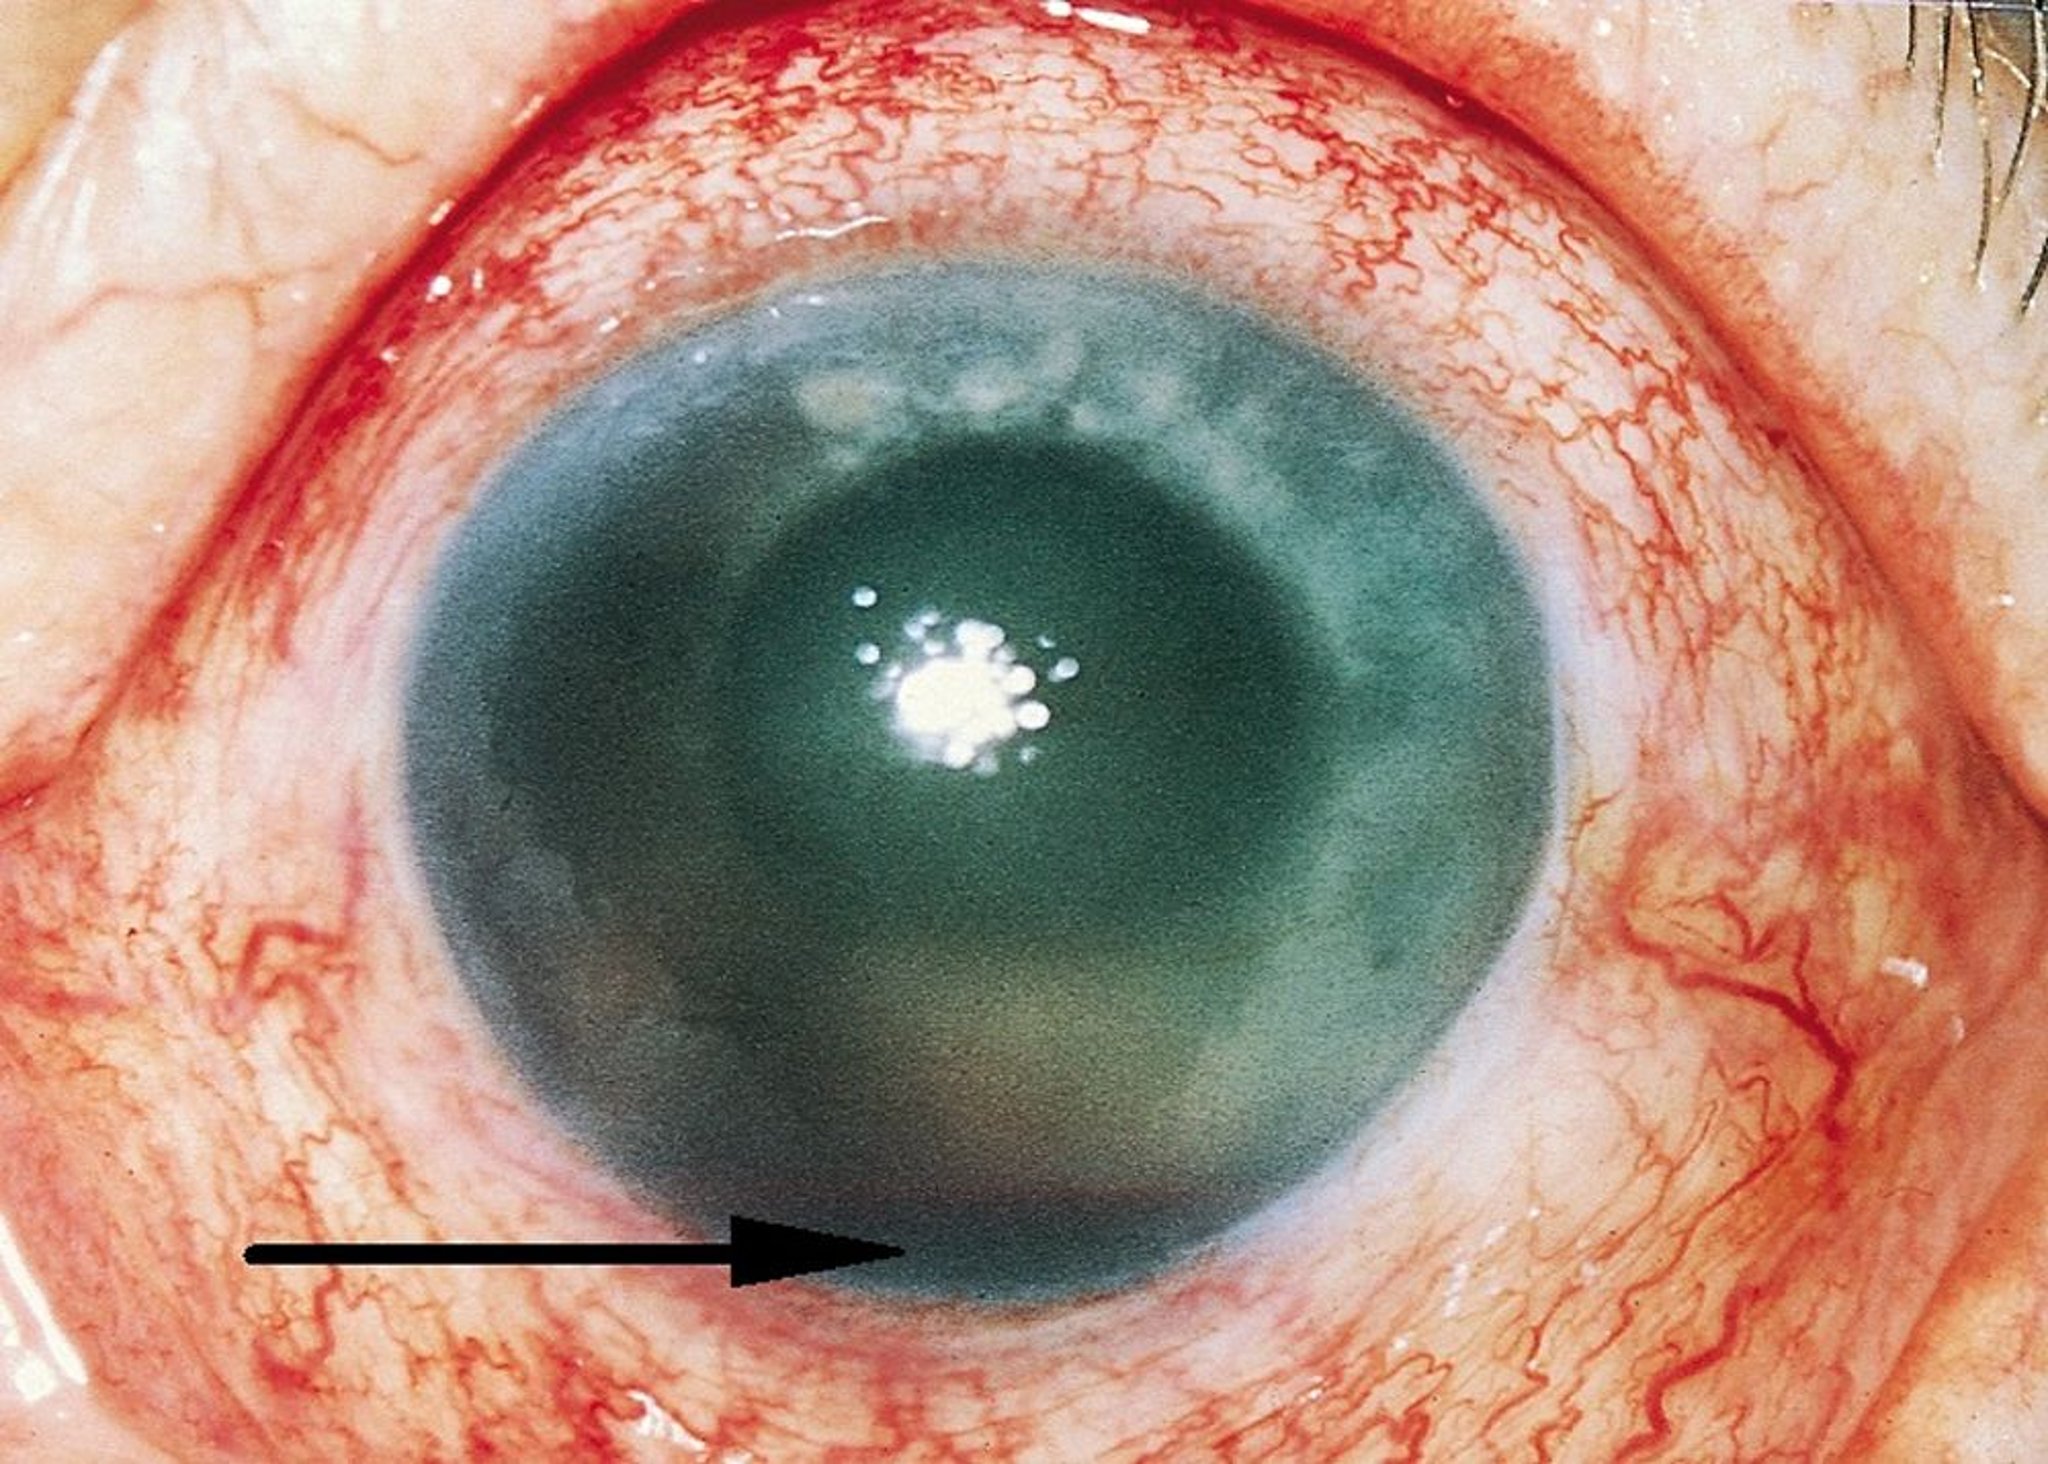 Hemorragia da câmara anterior (hifema)